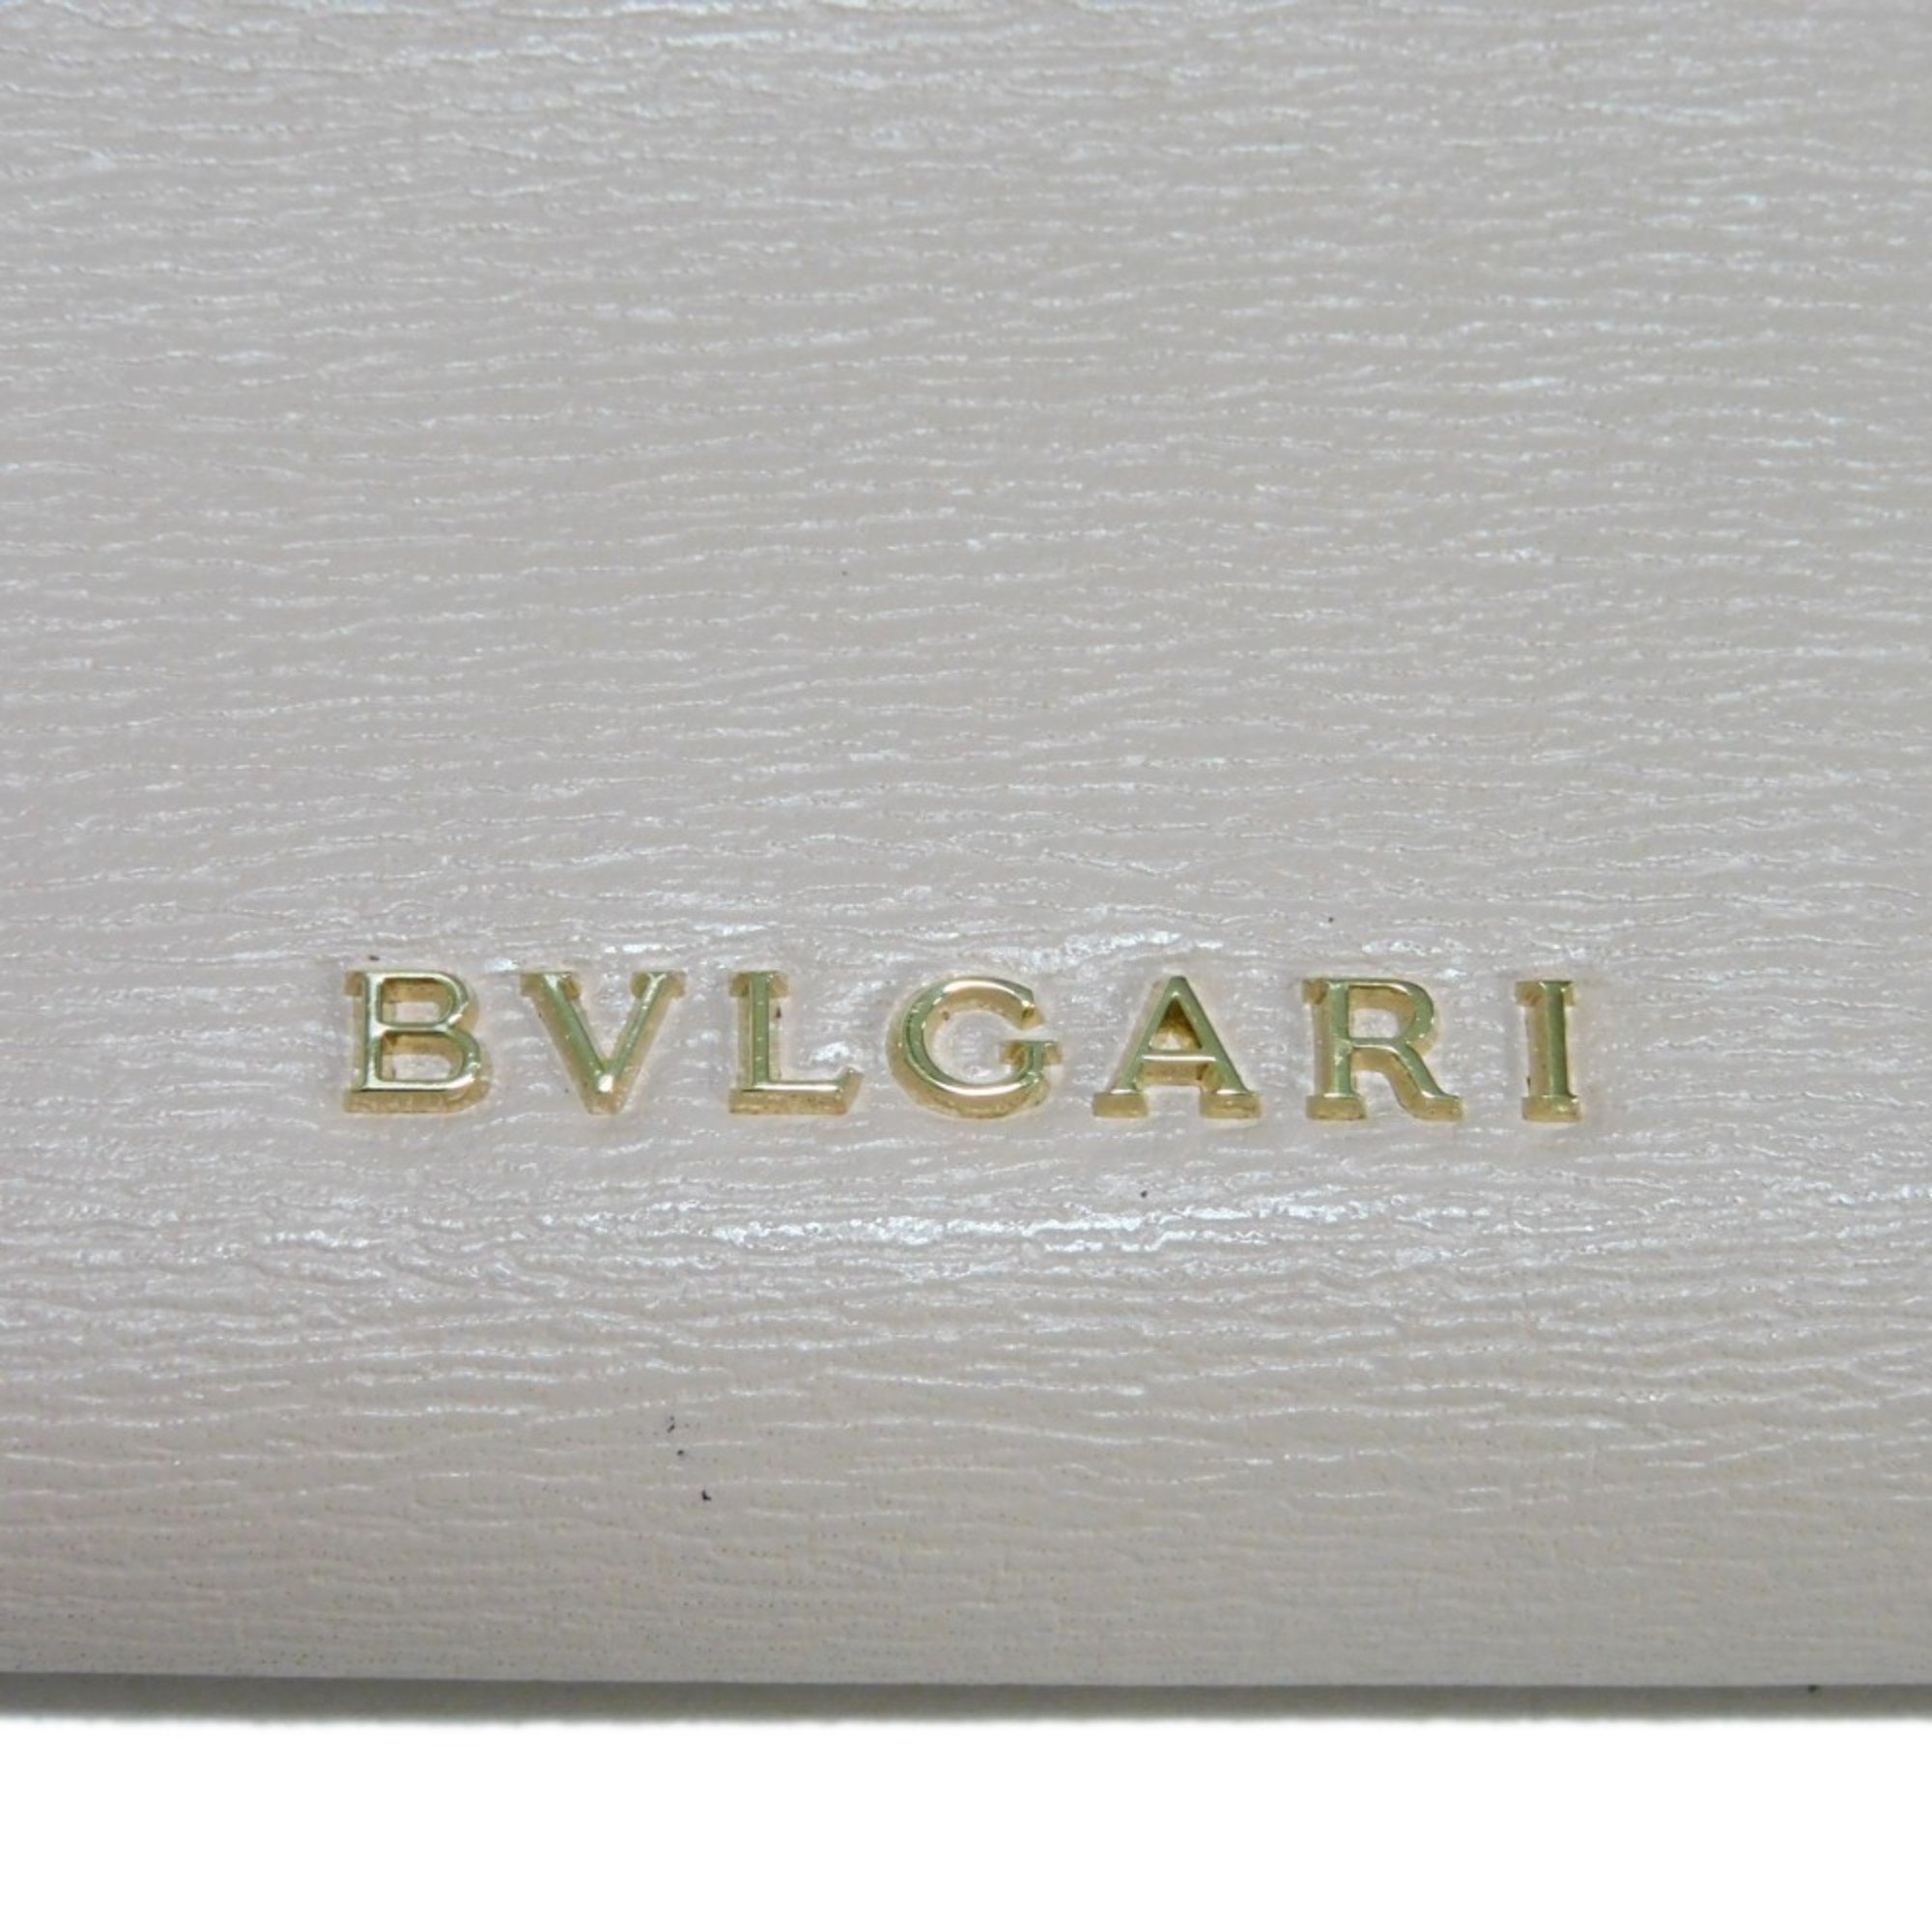 Bulgari BVLGARI Trifold Wallet Compact Snap Button Serpenti Forever Crystal Rose 289965 Women's